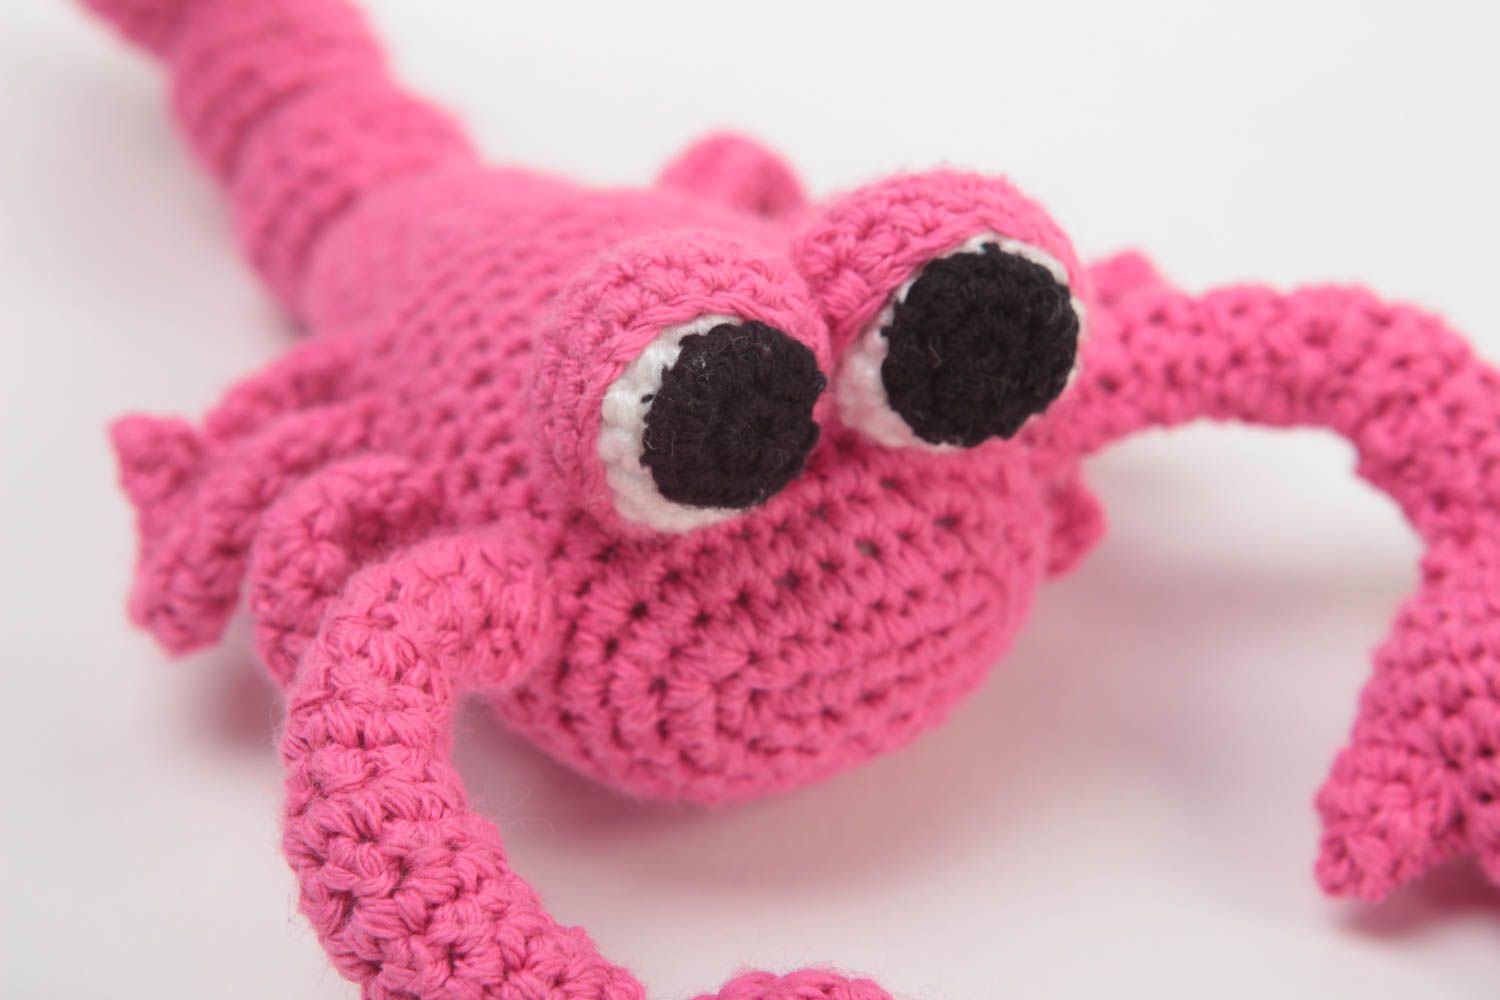 Cute handmade crochet toy unusual stuffed toy childrens soft toys gift ideas photo 3